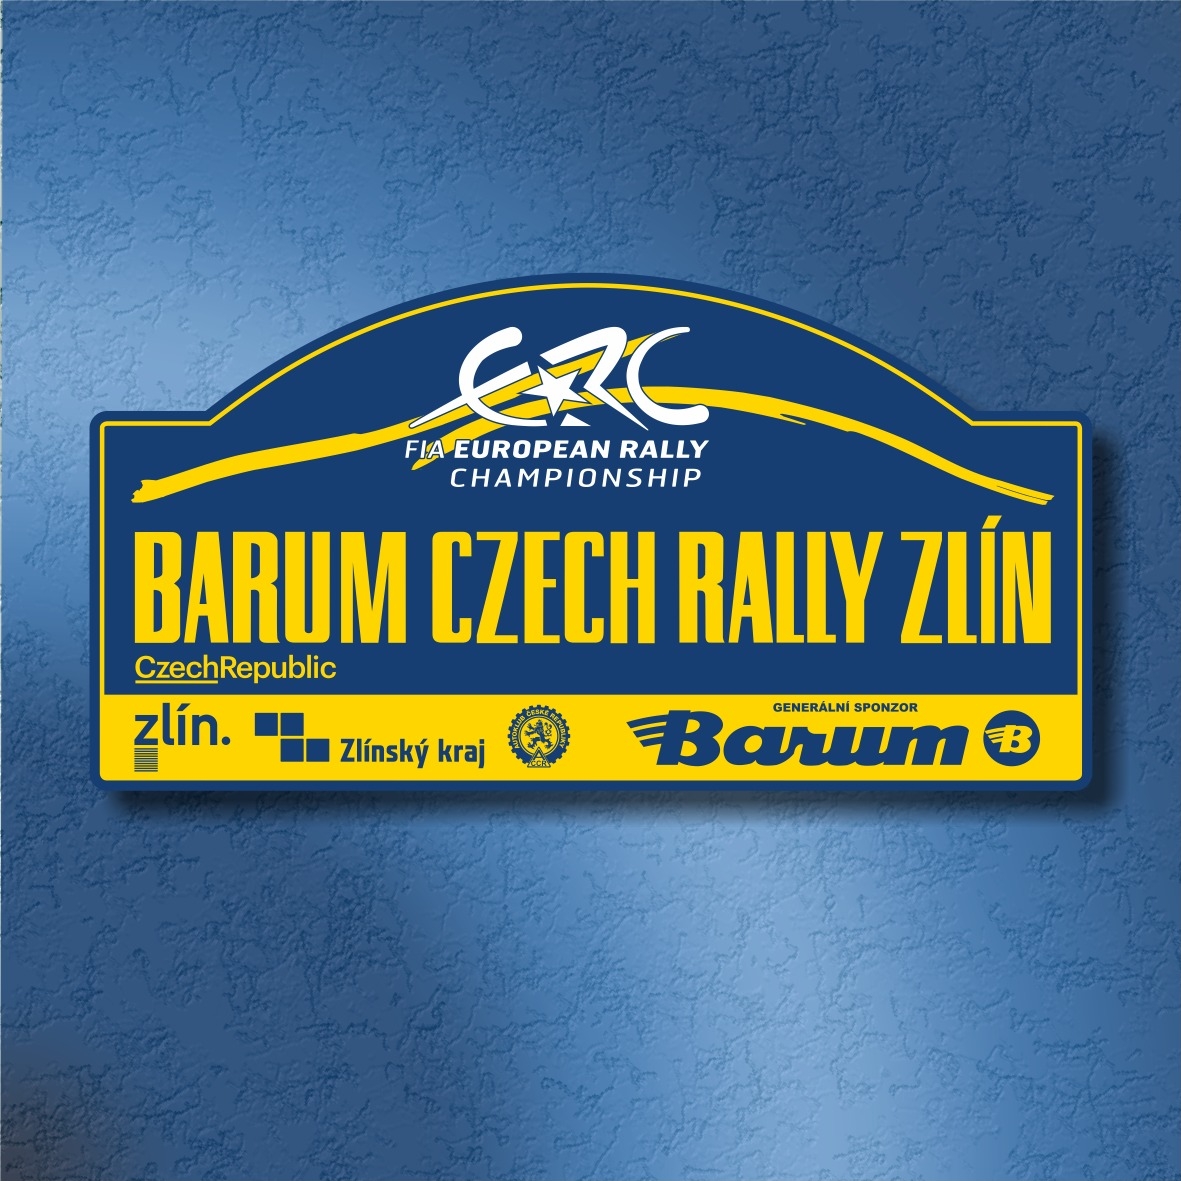 Barum Czech Rally Zlin